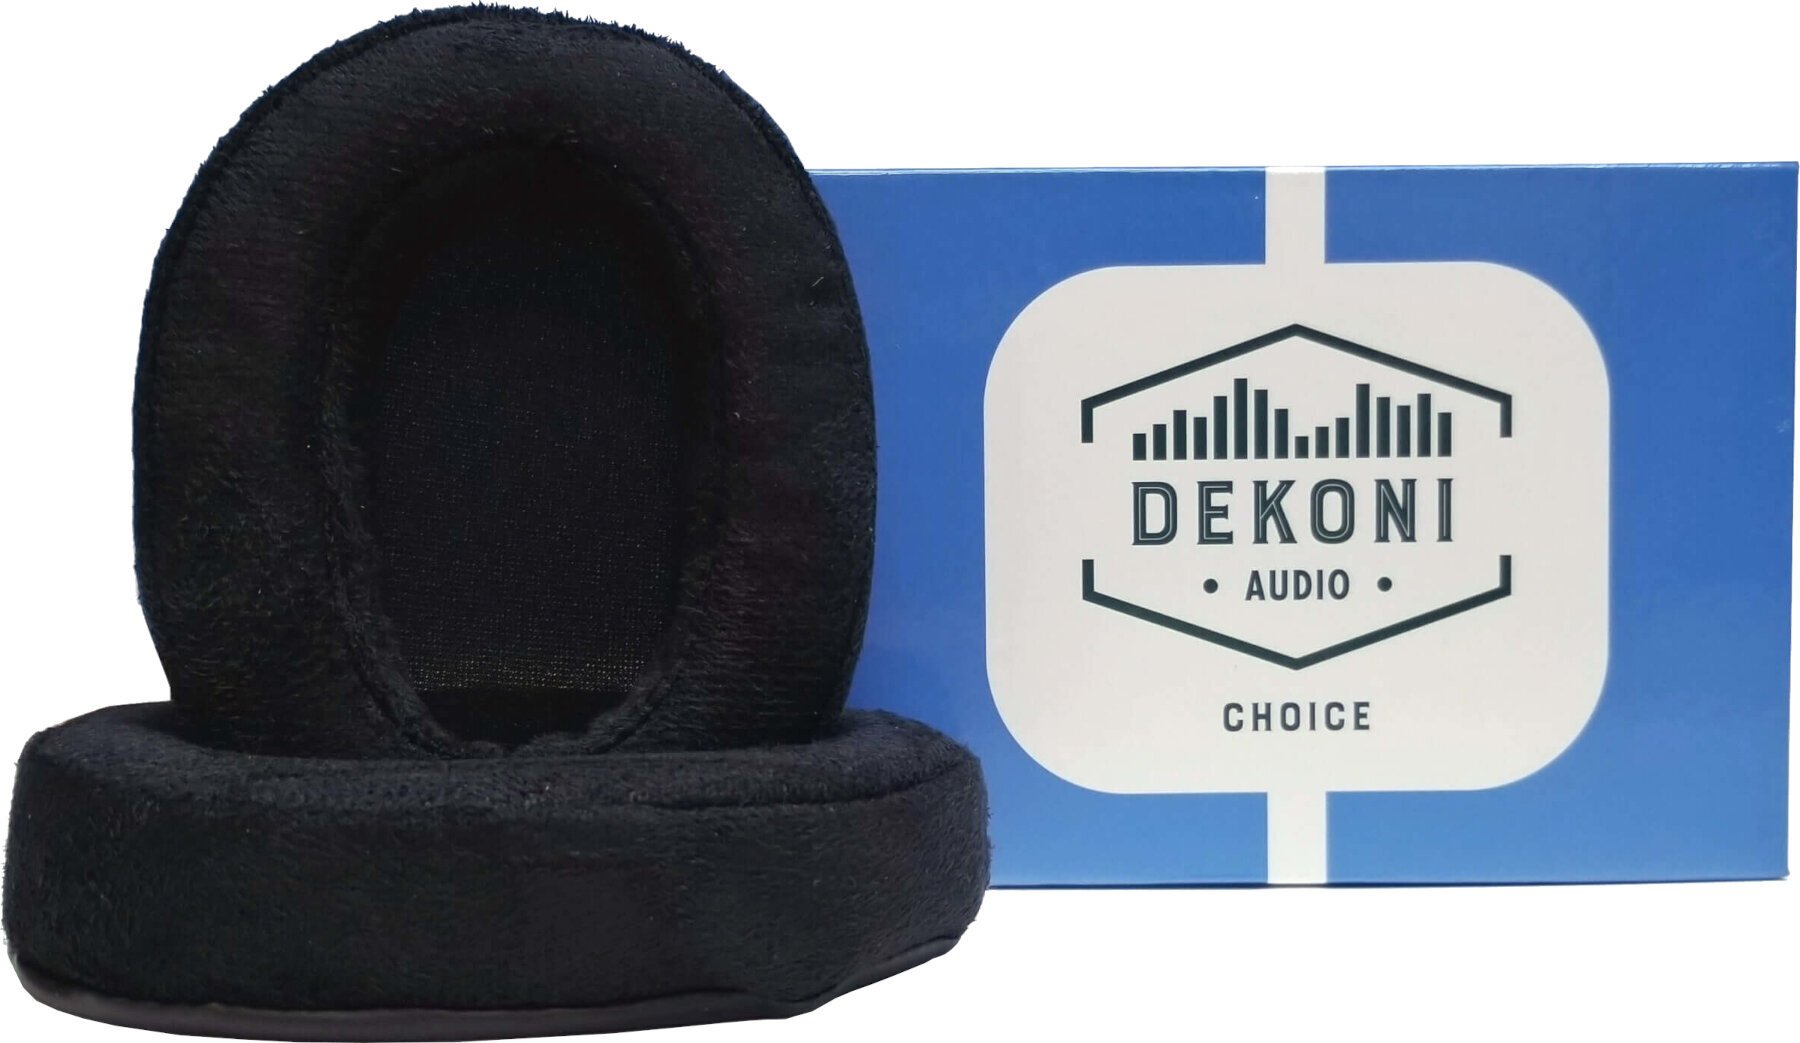 Ear Pads for headphones Dekoni Audio EPZ-K371-CHS Ear Pads for headphones Black